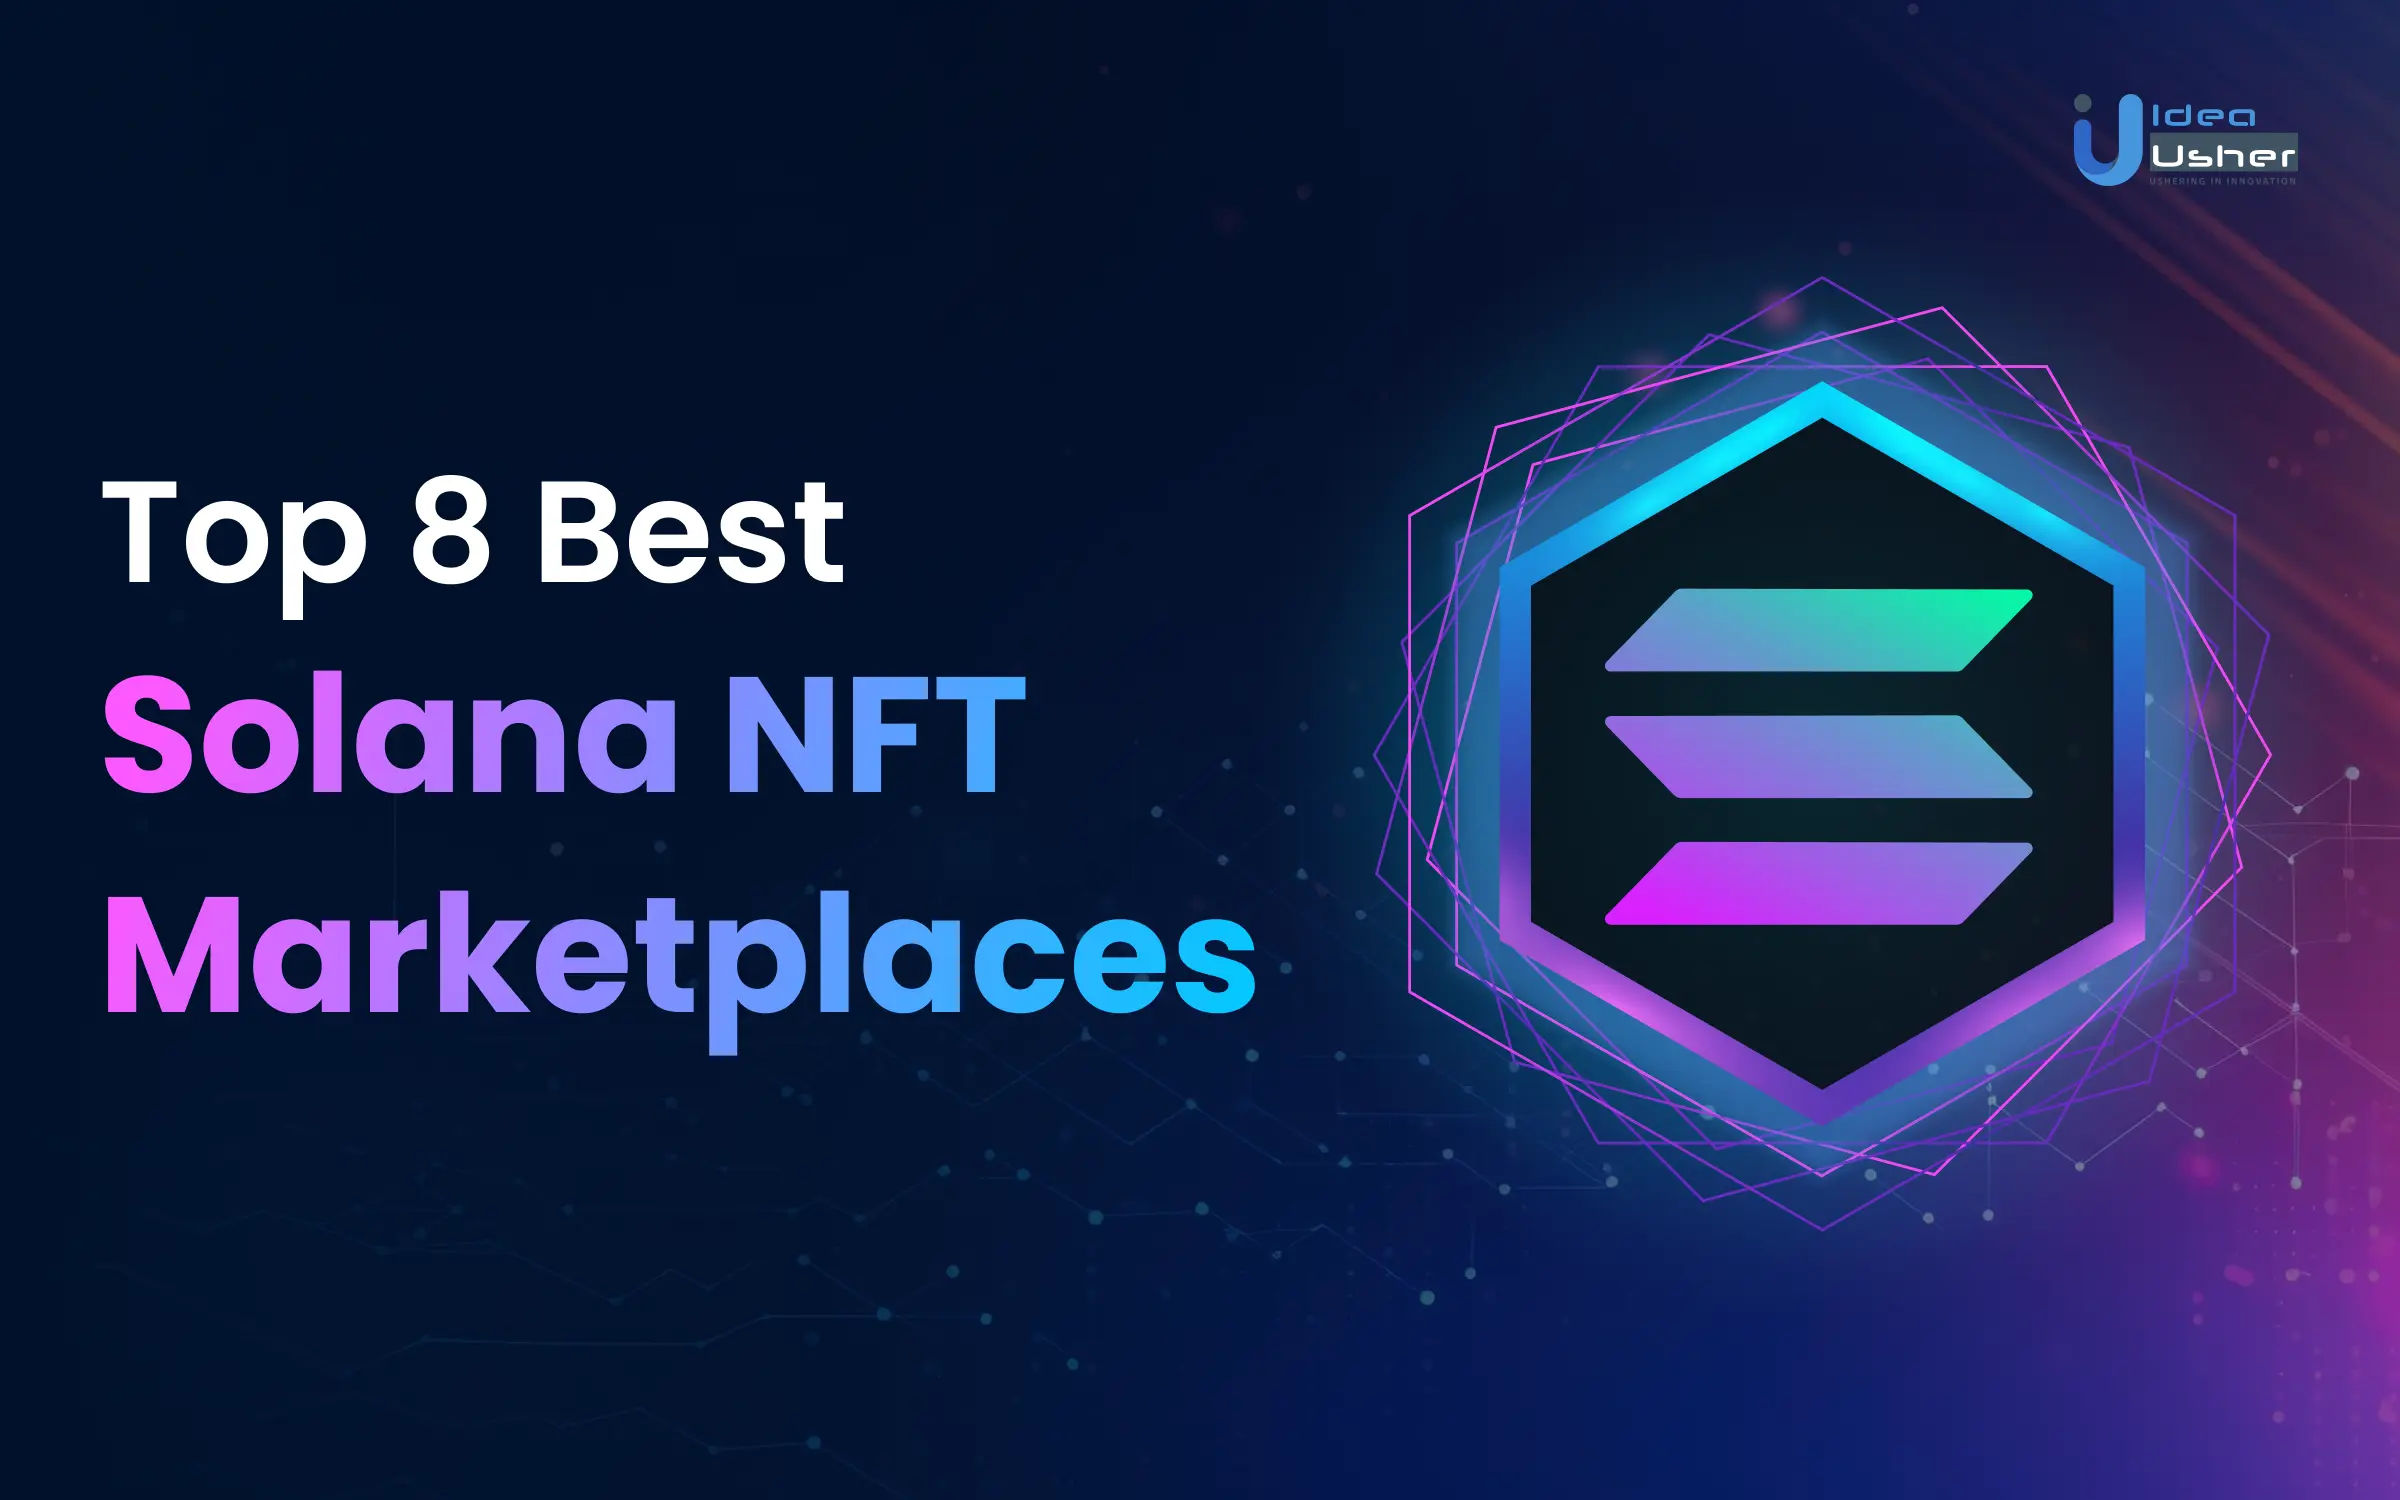 Top 8 best Solana NFT marketplaces